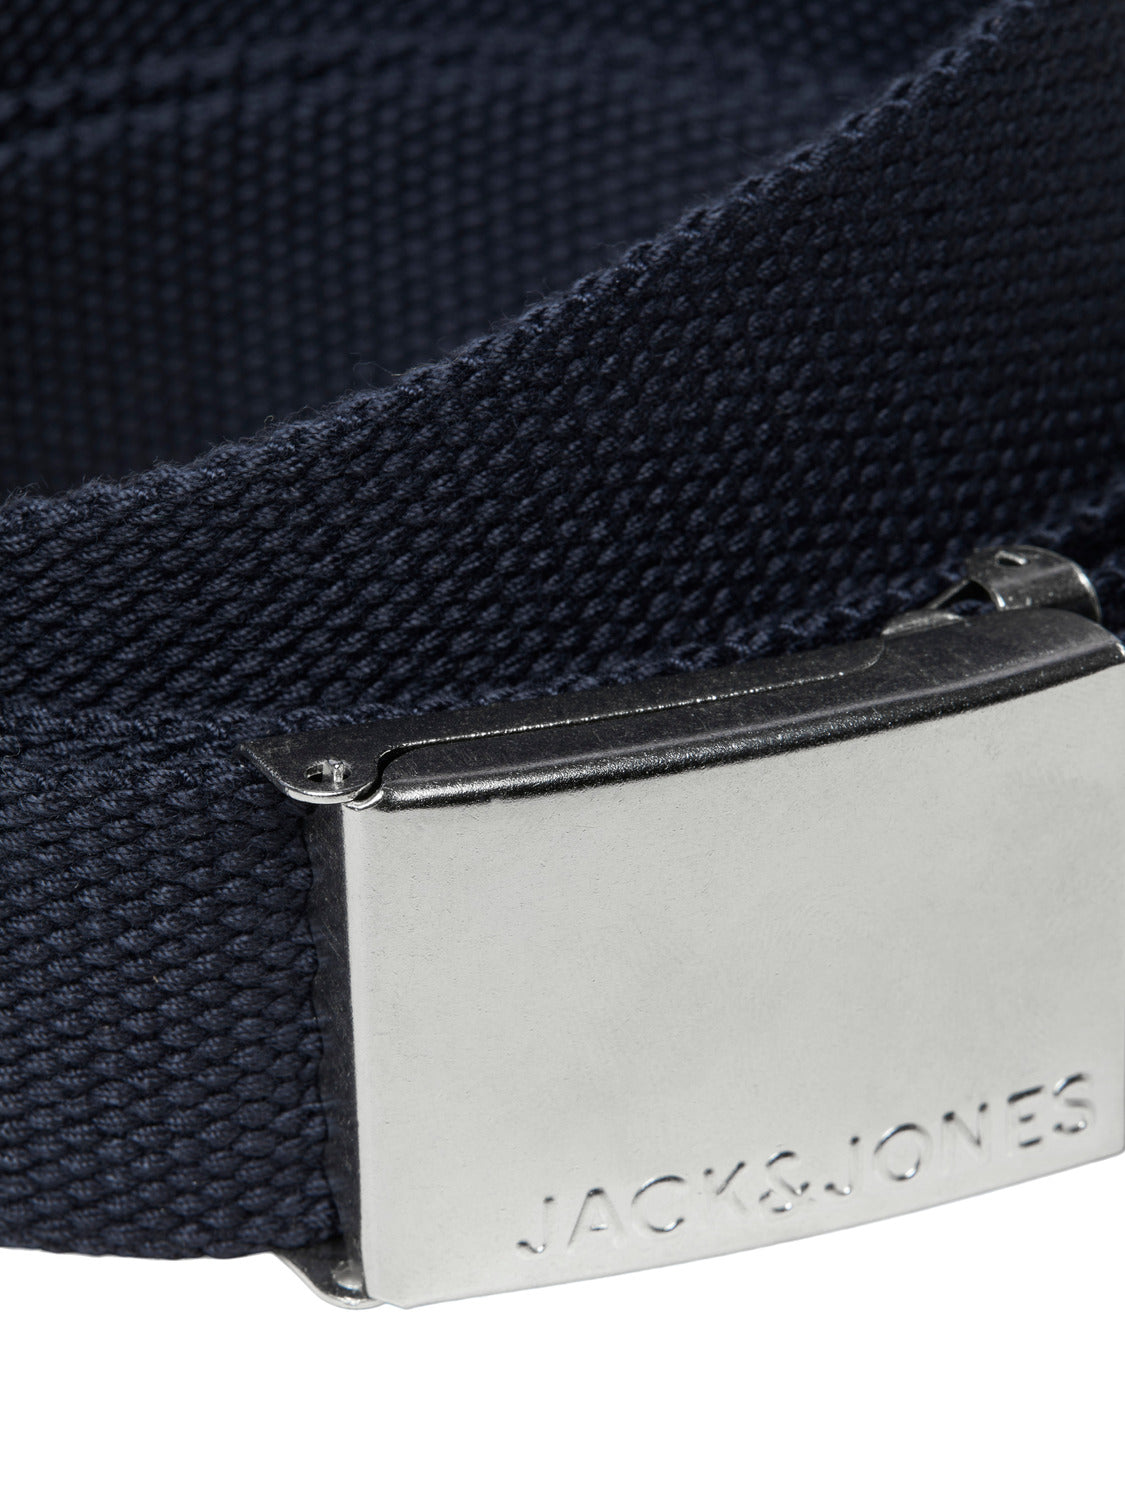 Cinturón Azul marino - JACLANDON